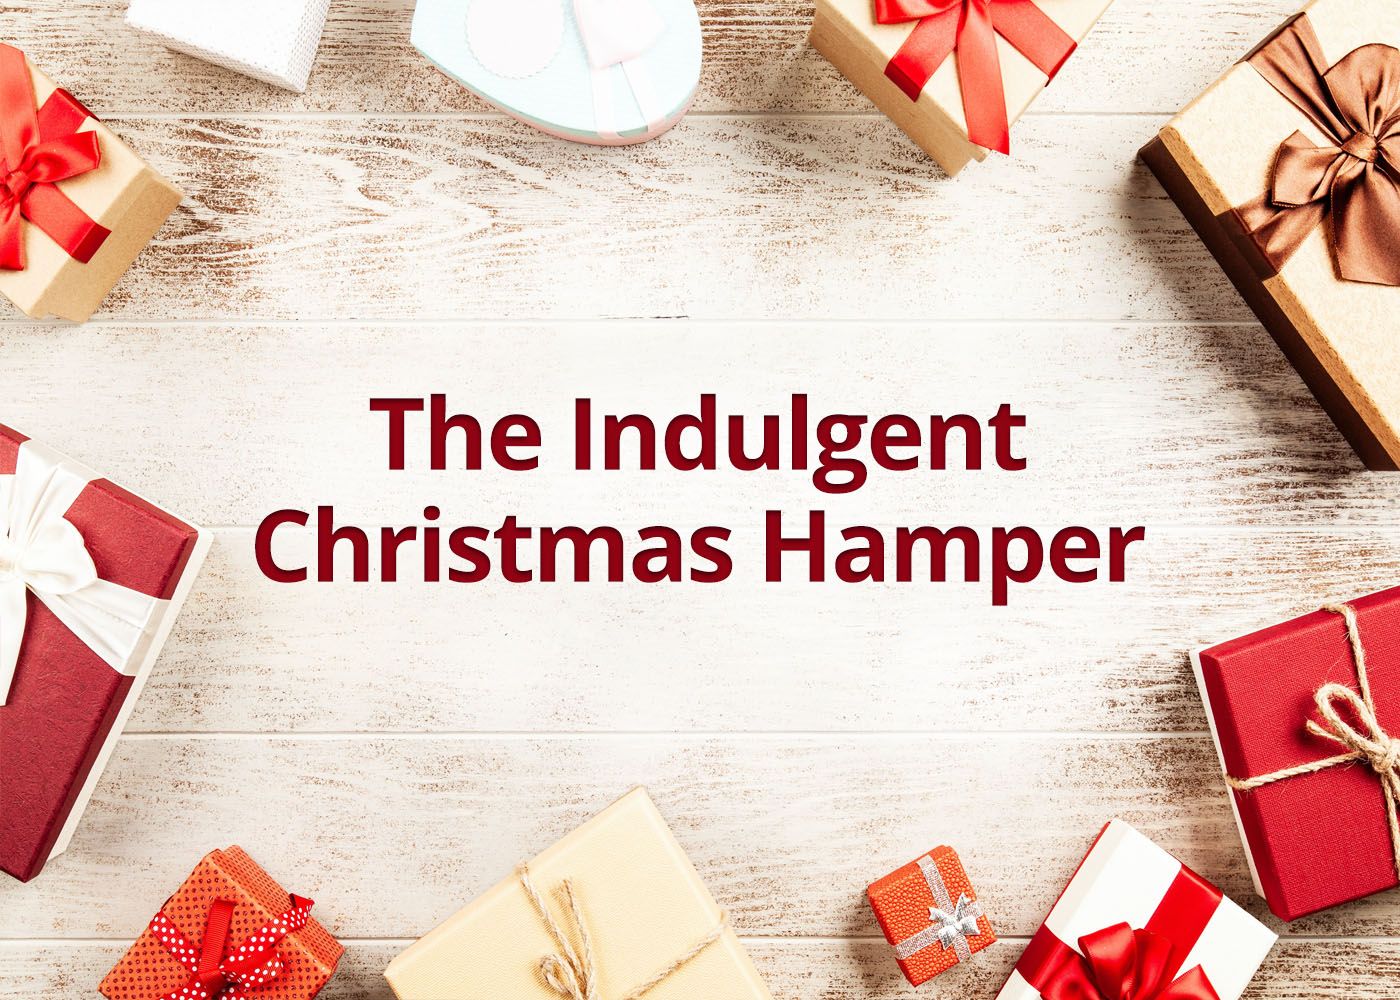 The Indulgent Christmas Hamper - Serves 8-10